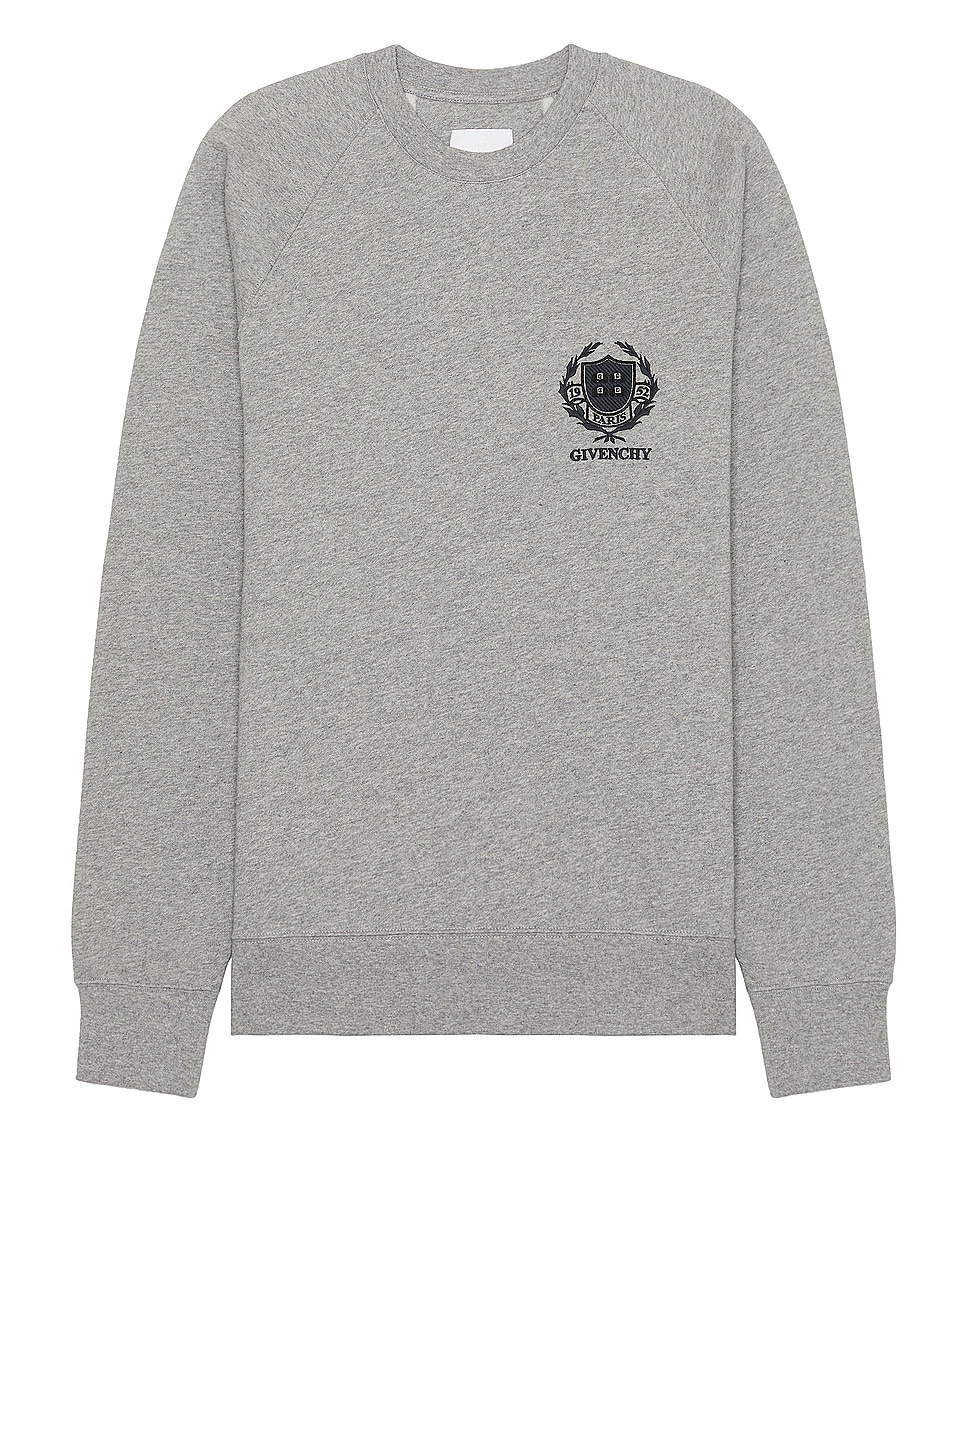 Image 1 of Givenchy Slim Fit Raglan Sweatshirt in Light Grey Melange